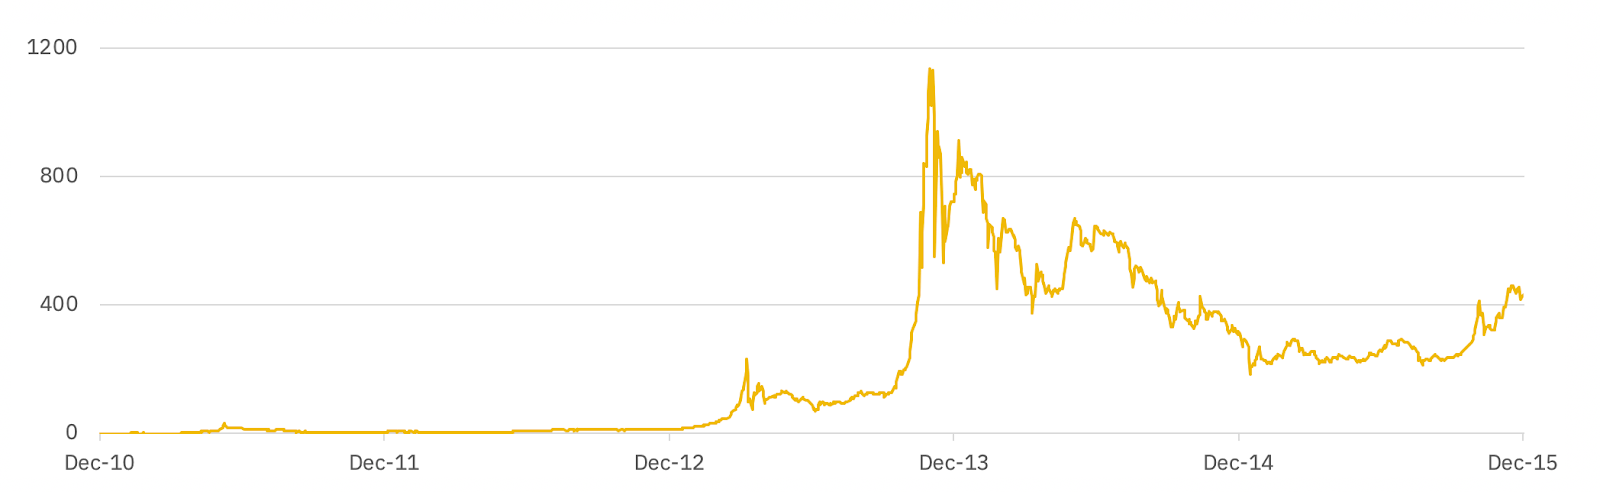 Bitcoin Price Chart Since 2010